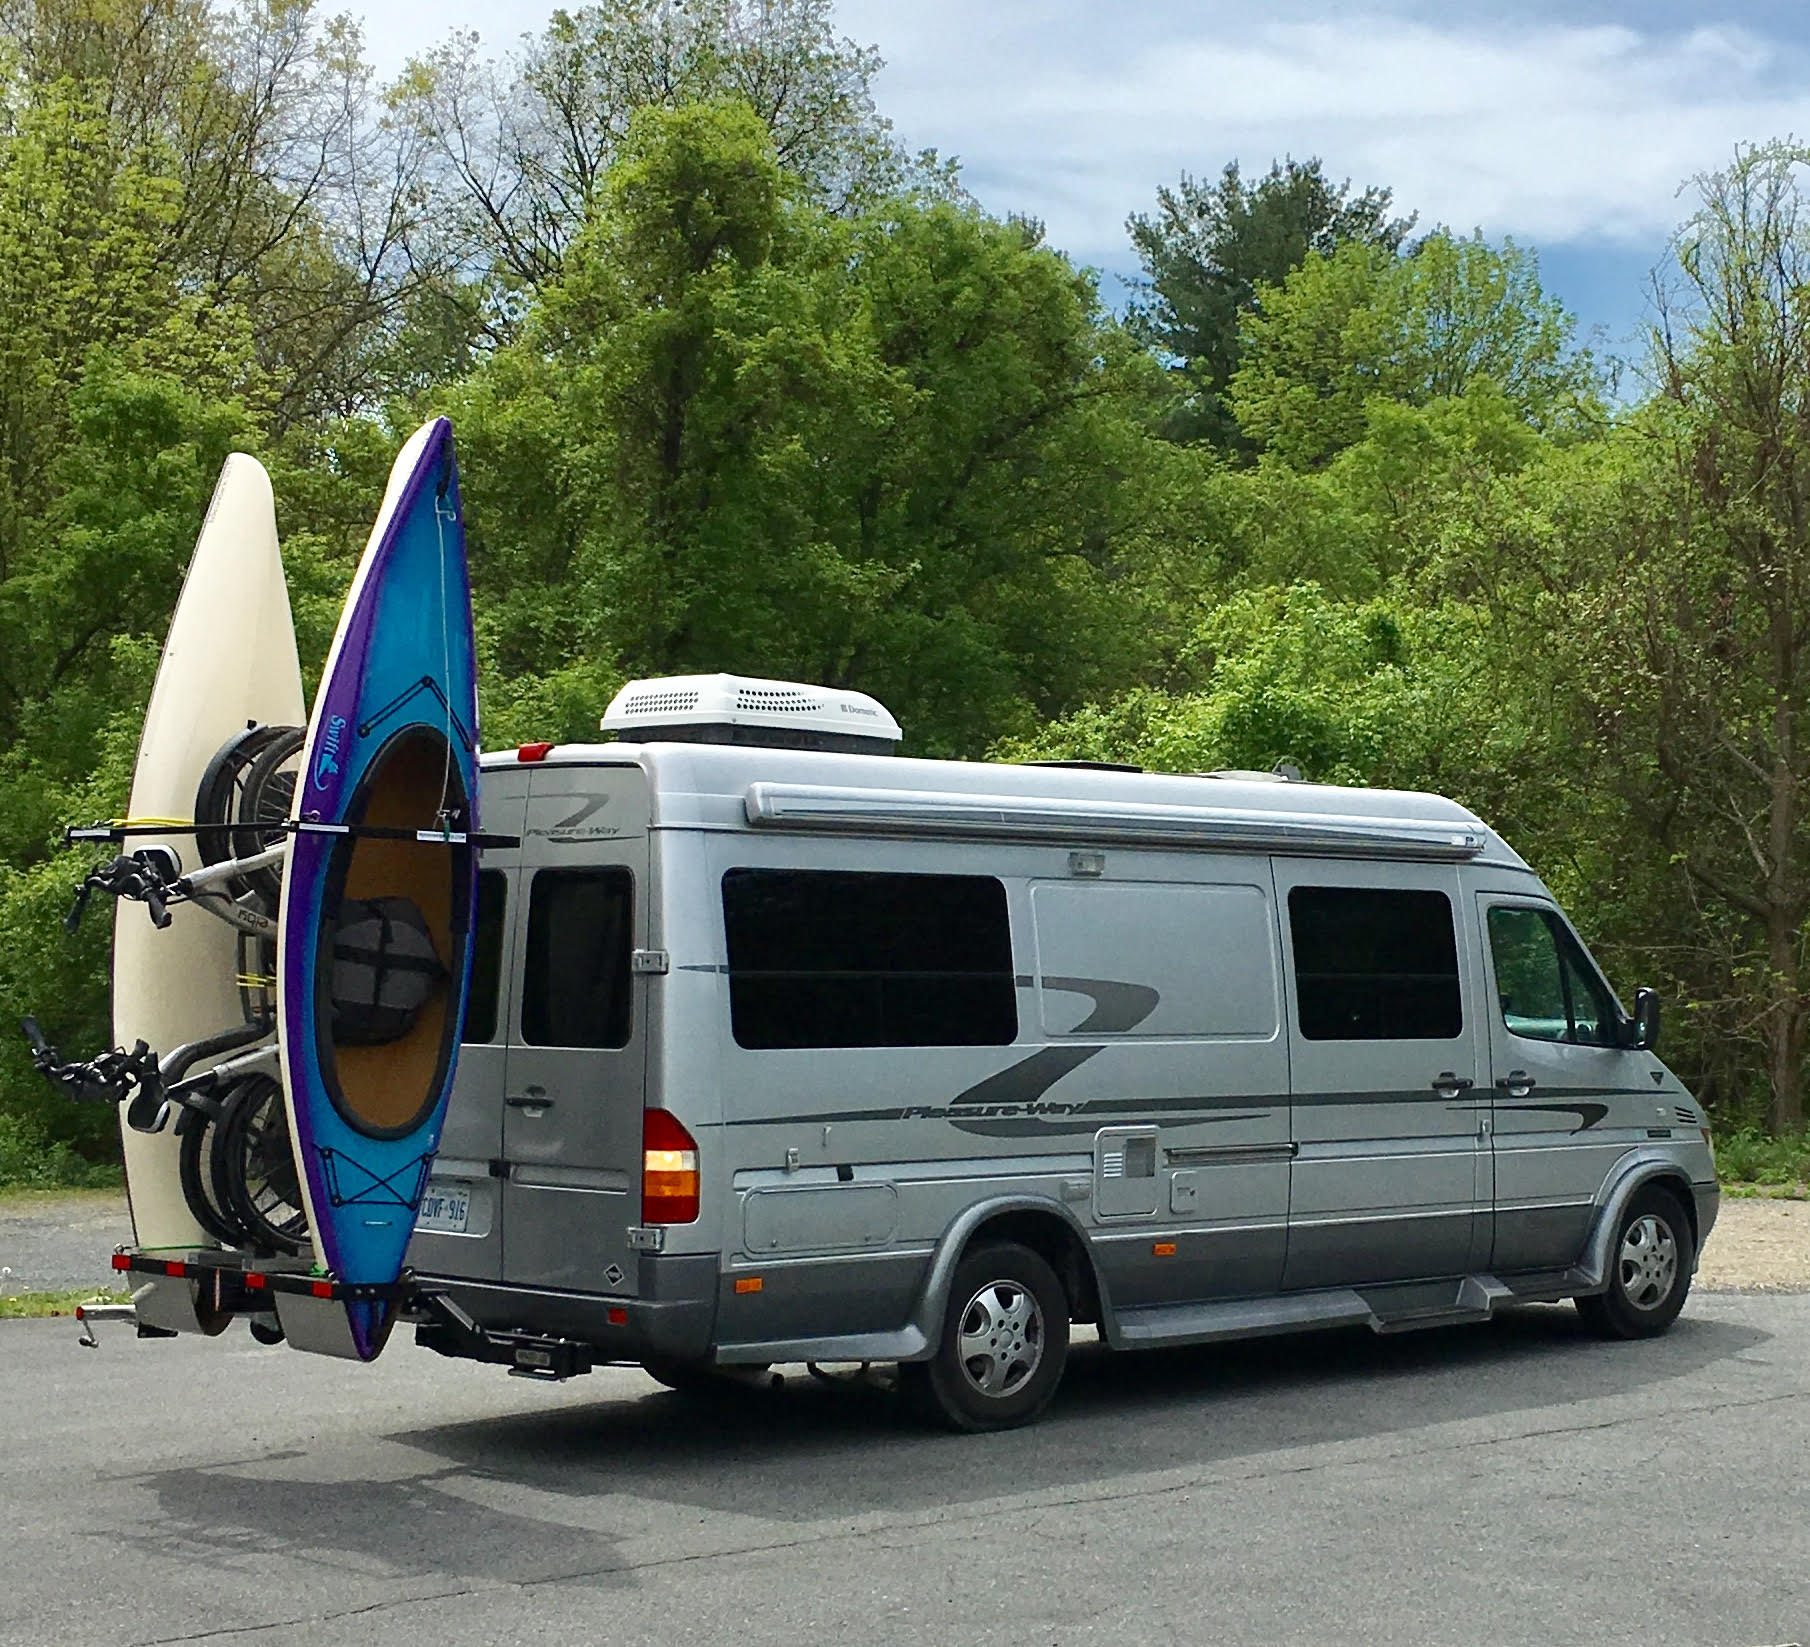 trailer hitch surfboard rack